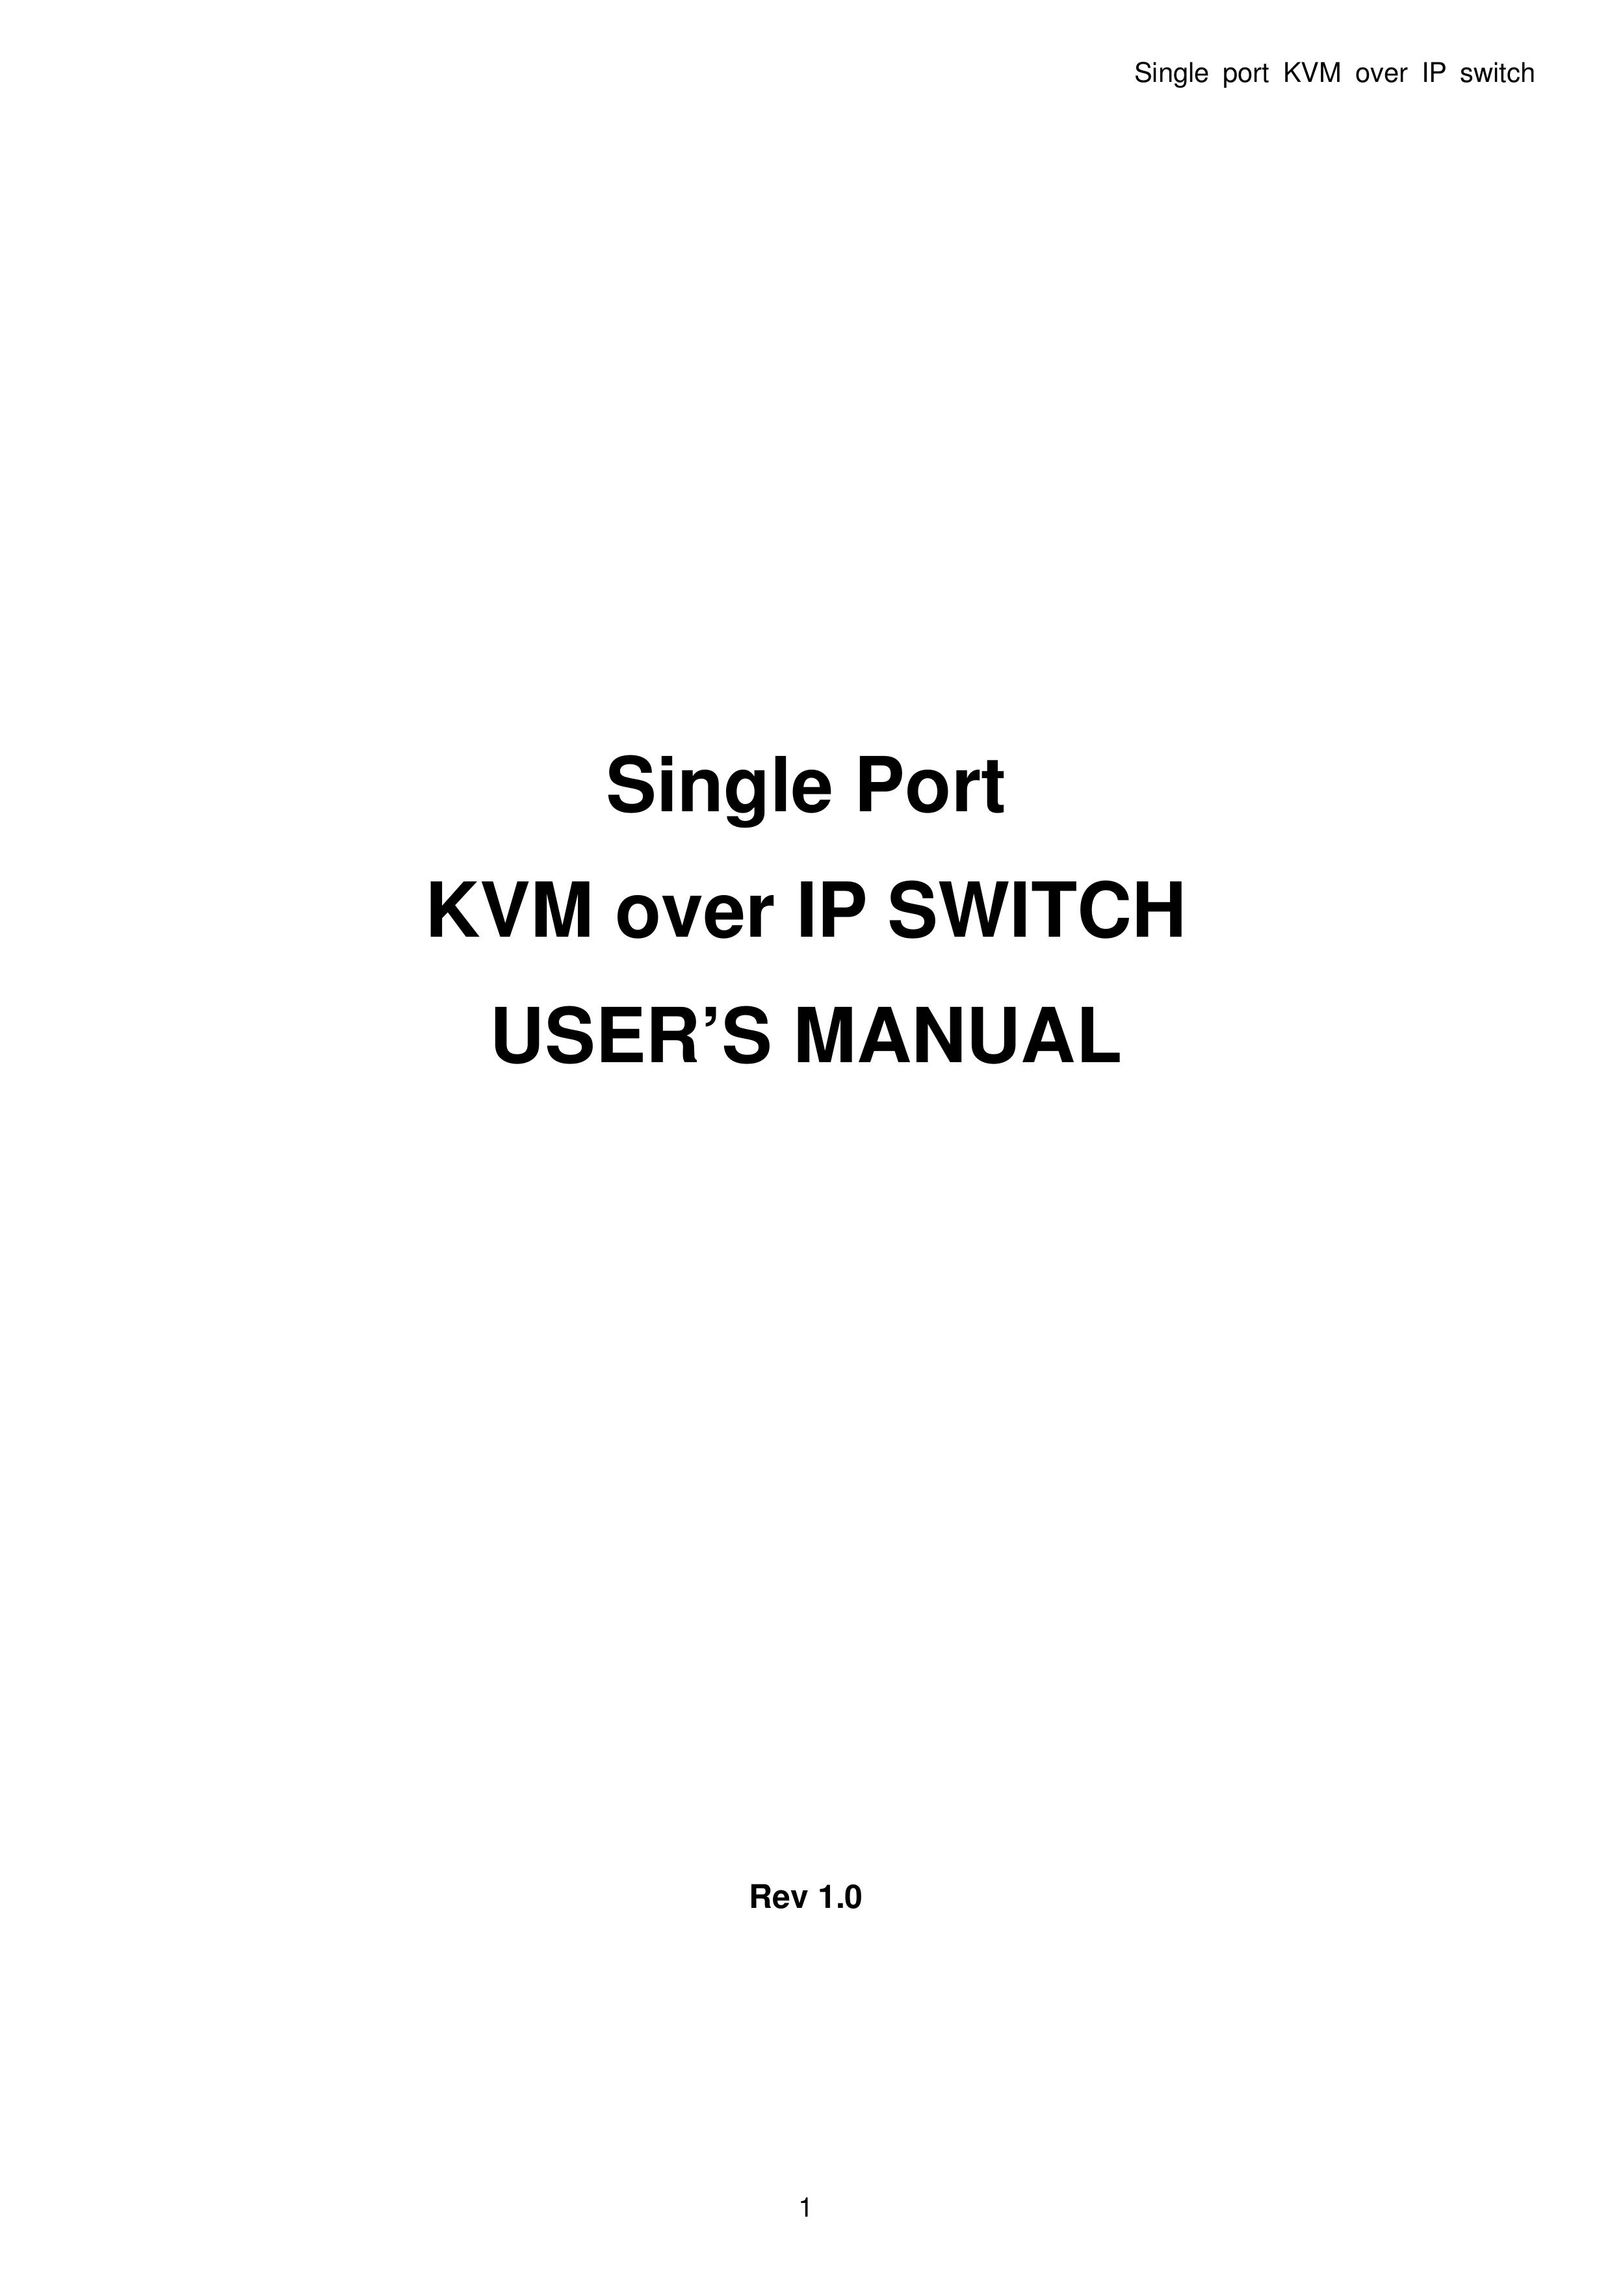 Avocent Single port KVM over IP switch Network Card User Manual